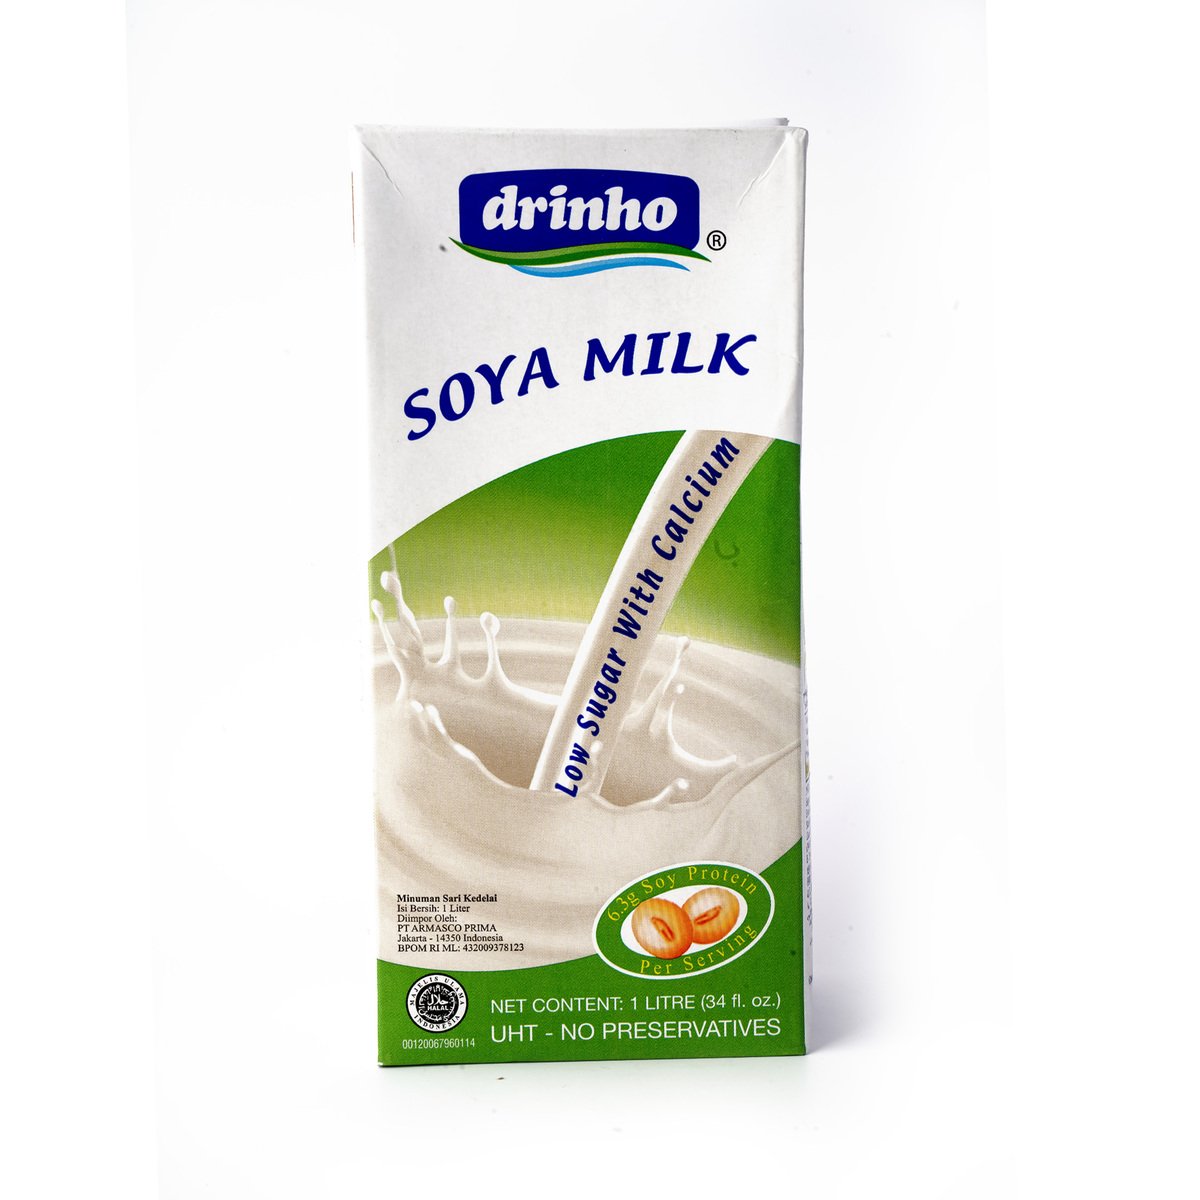 Drinho Soya Milk Low Sugar with Calcium 1 Litre